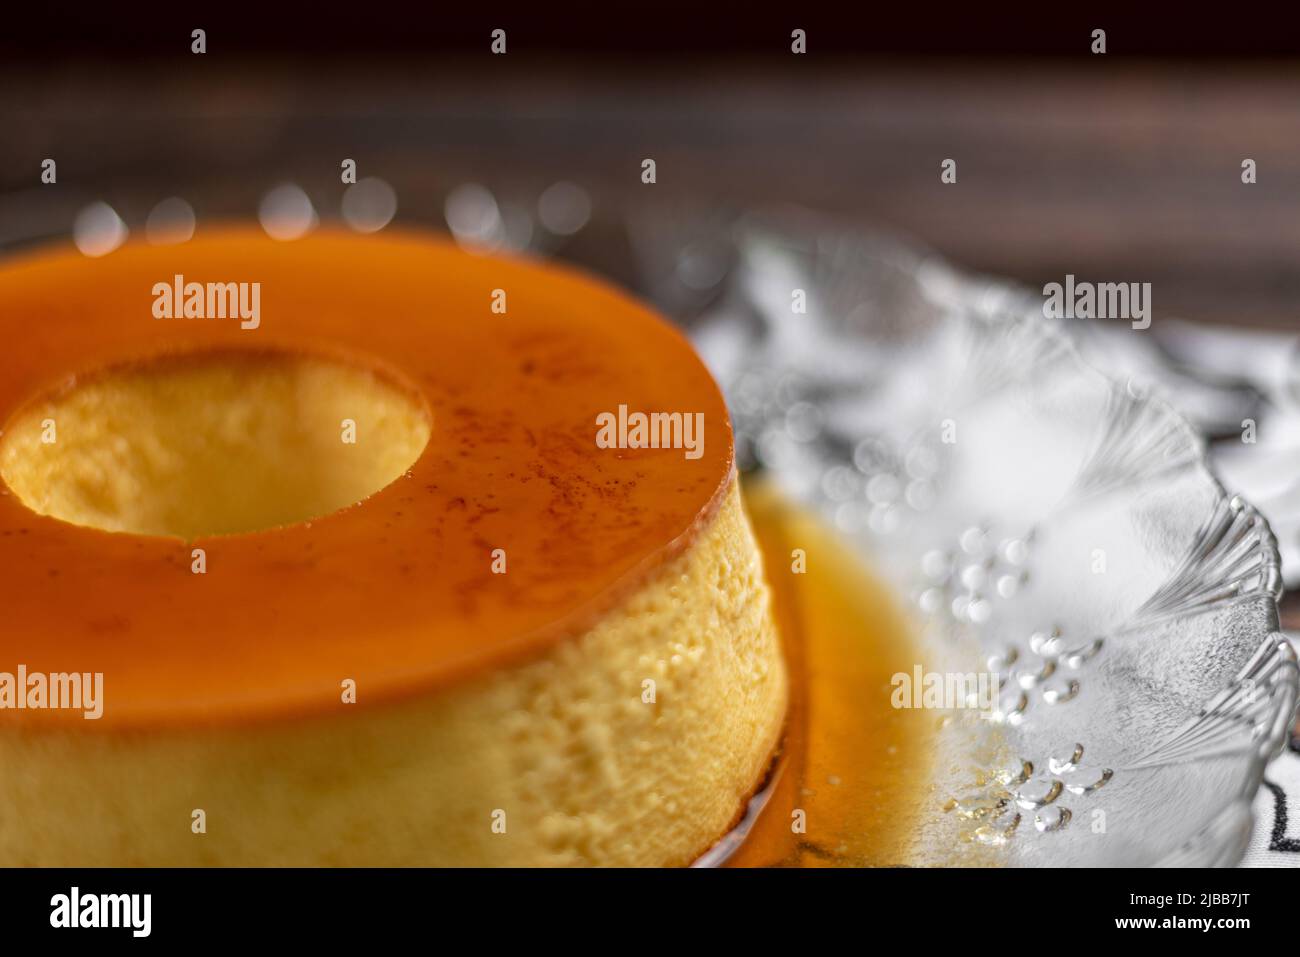 https://c8.alamy.com/comp/2JBB7JT/milk-pudding-or-pudim-de-leite-brazilian-dessert-homemade-caramel-custard-pudding-traditional-brazilian-flan-on-wooden-background-2JBB7JT.jpg